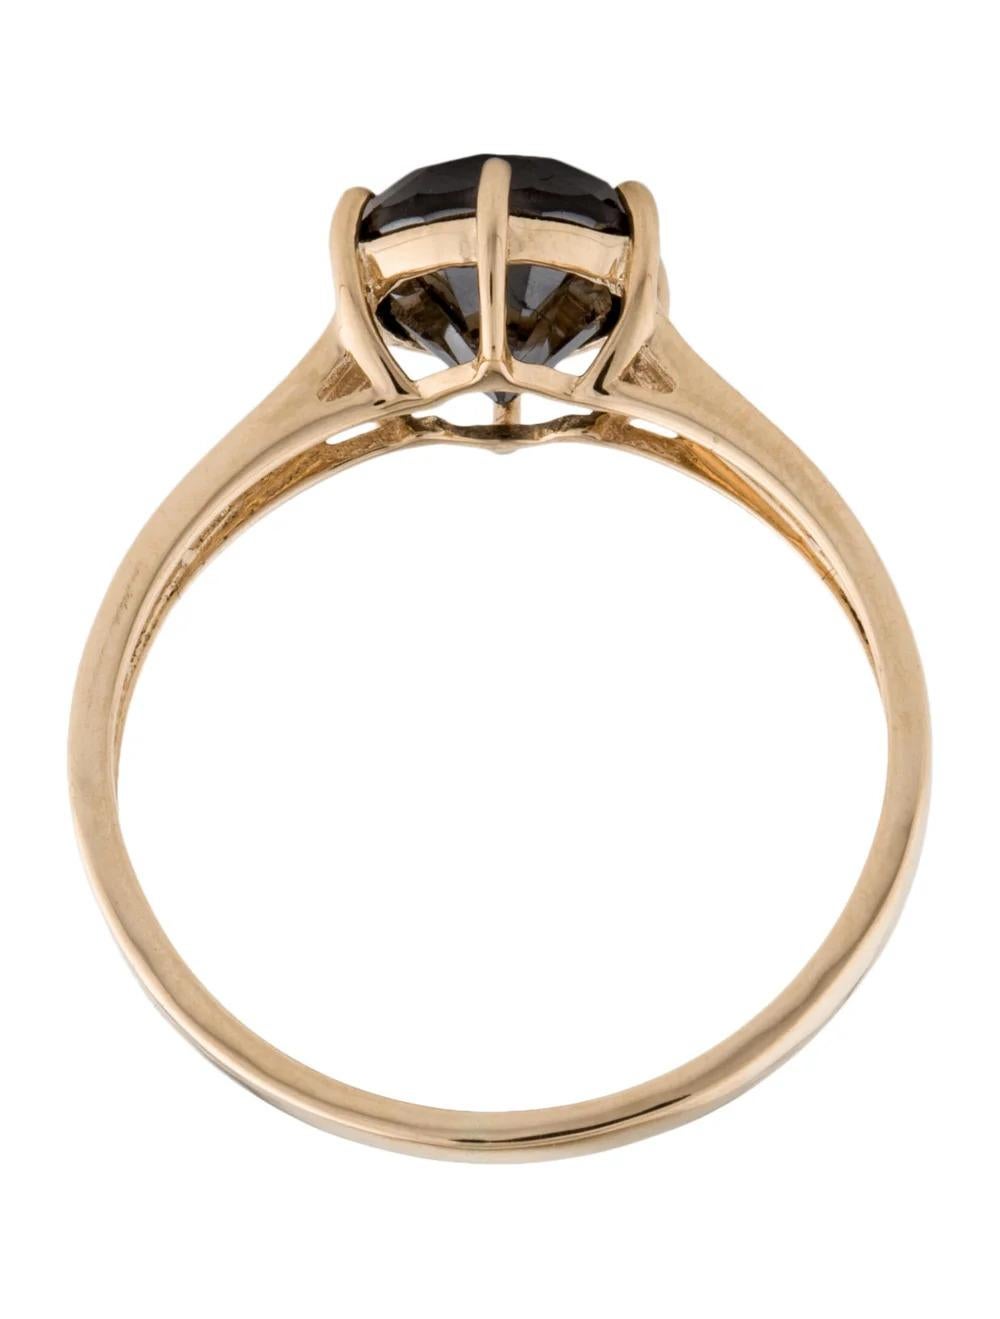 Women's 14K 1.75ctw Diamond Engagement Ring - Size 6.75 - Stunning Design, Luxury Piece For Sale